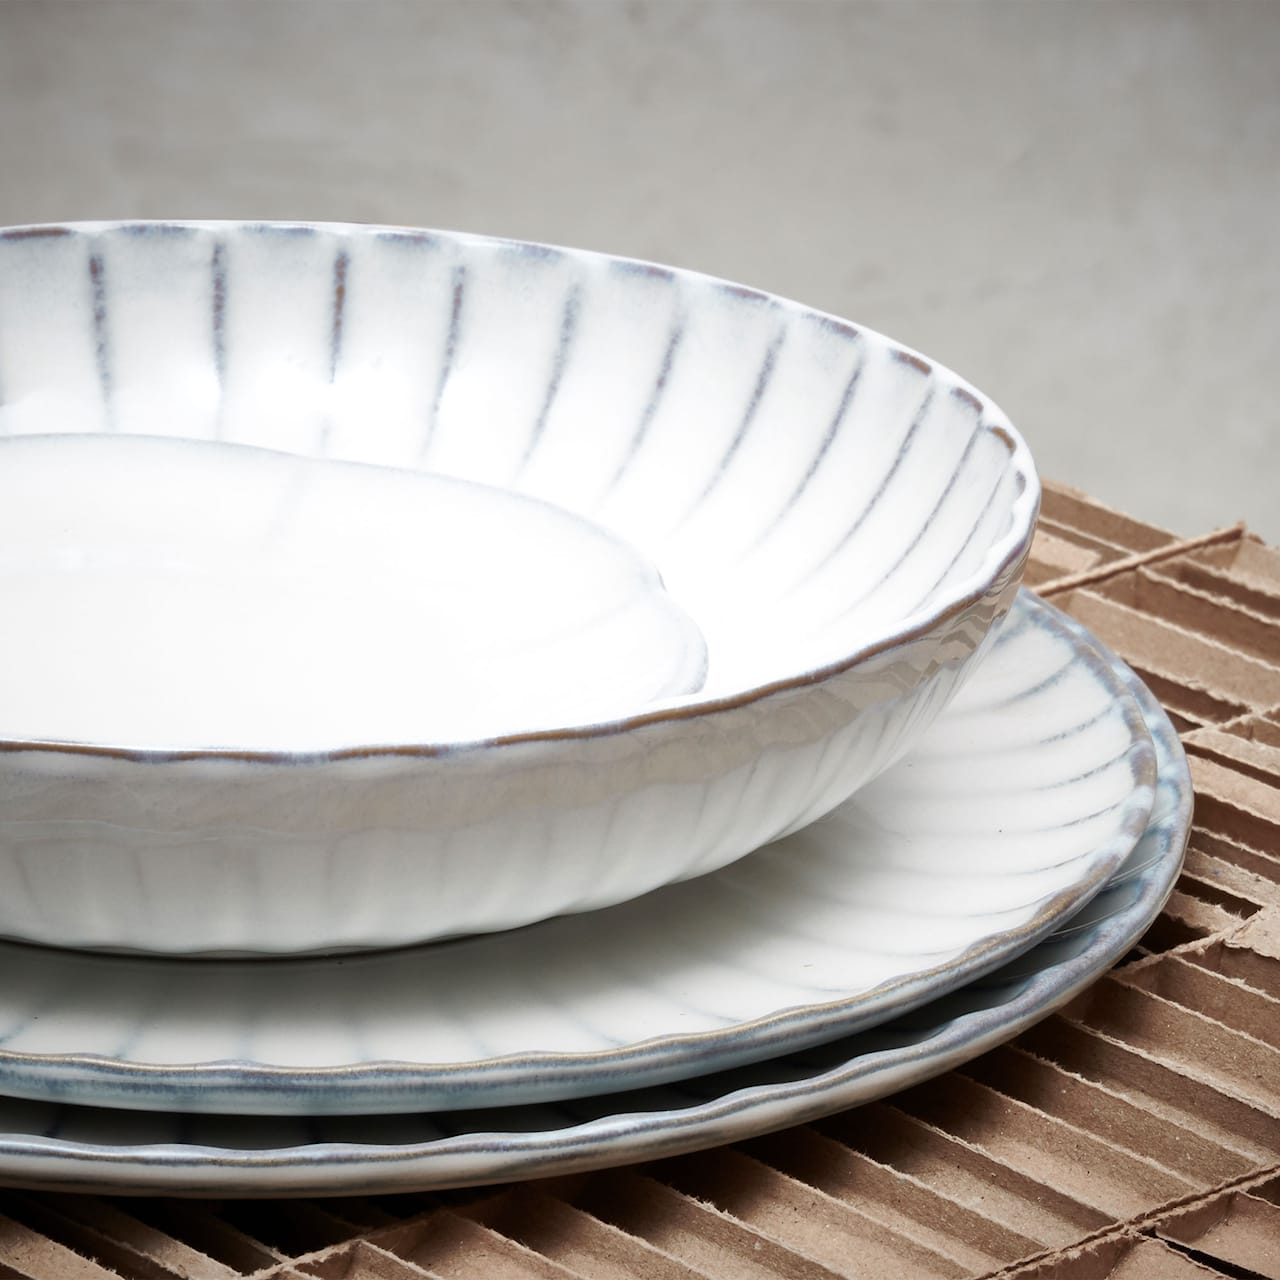 Inku High Plate - White